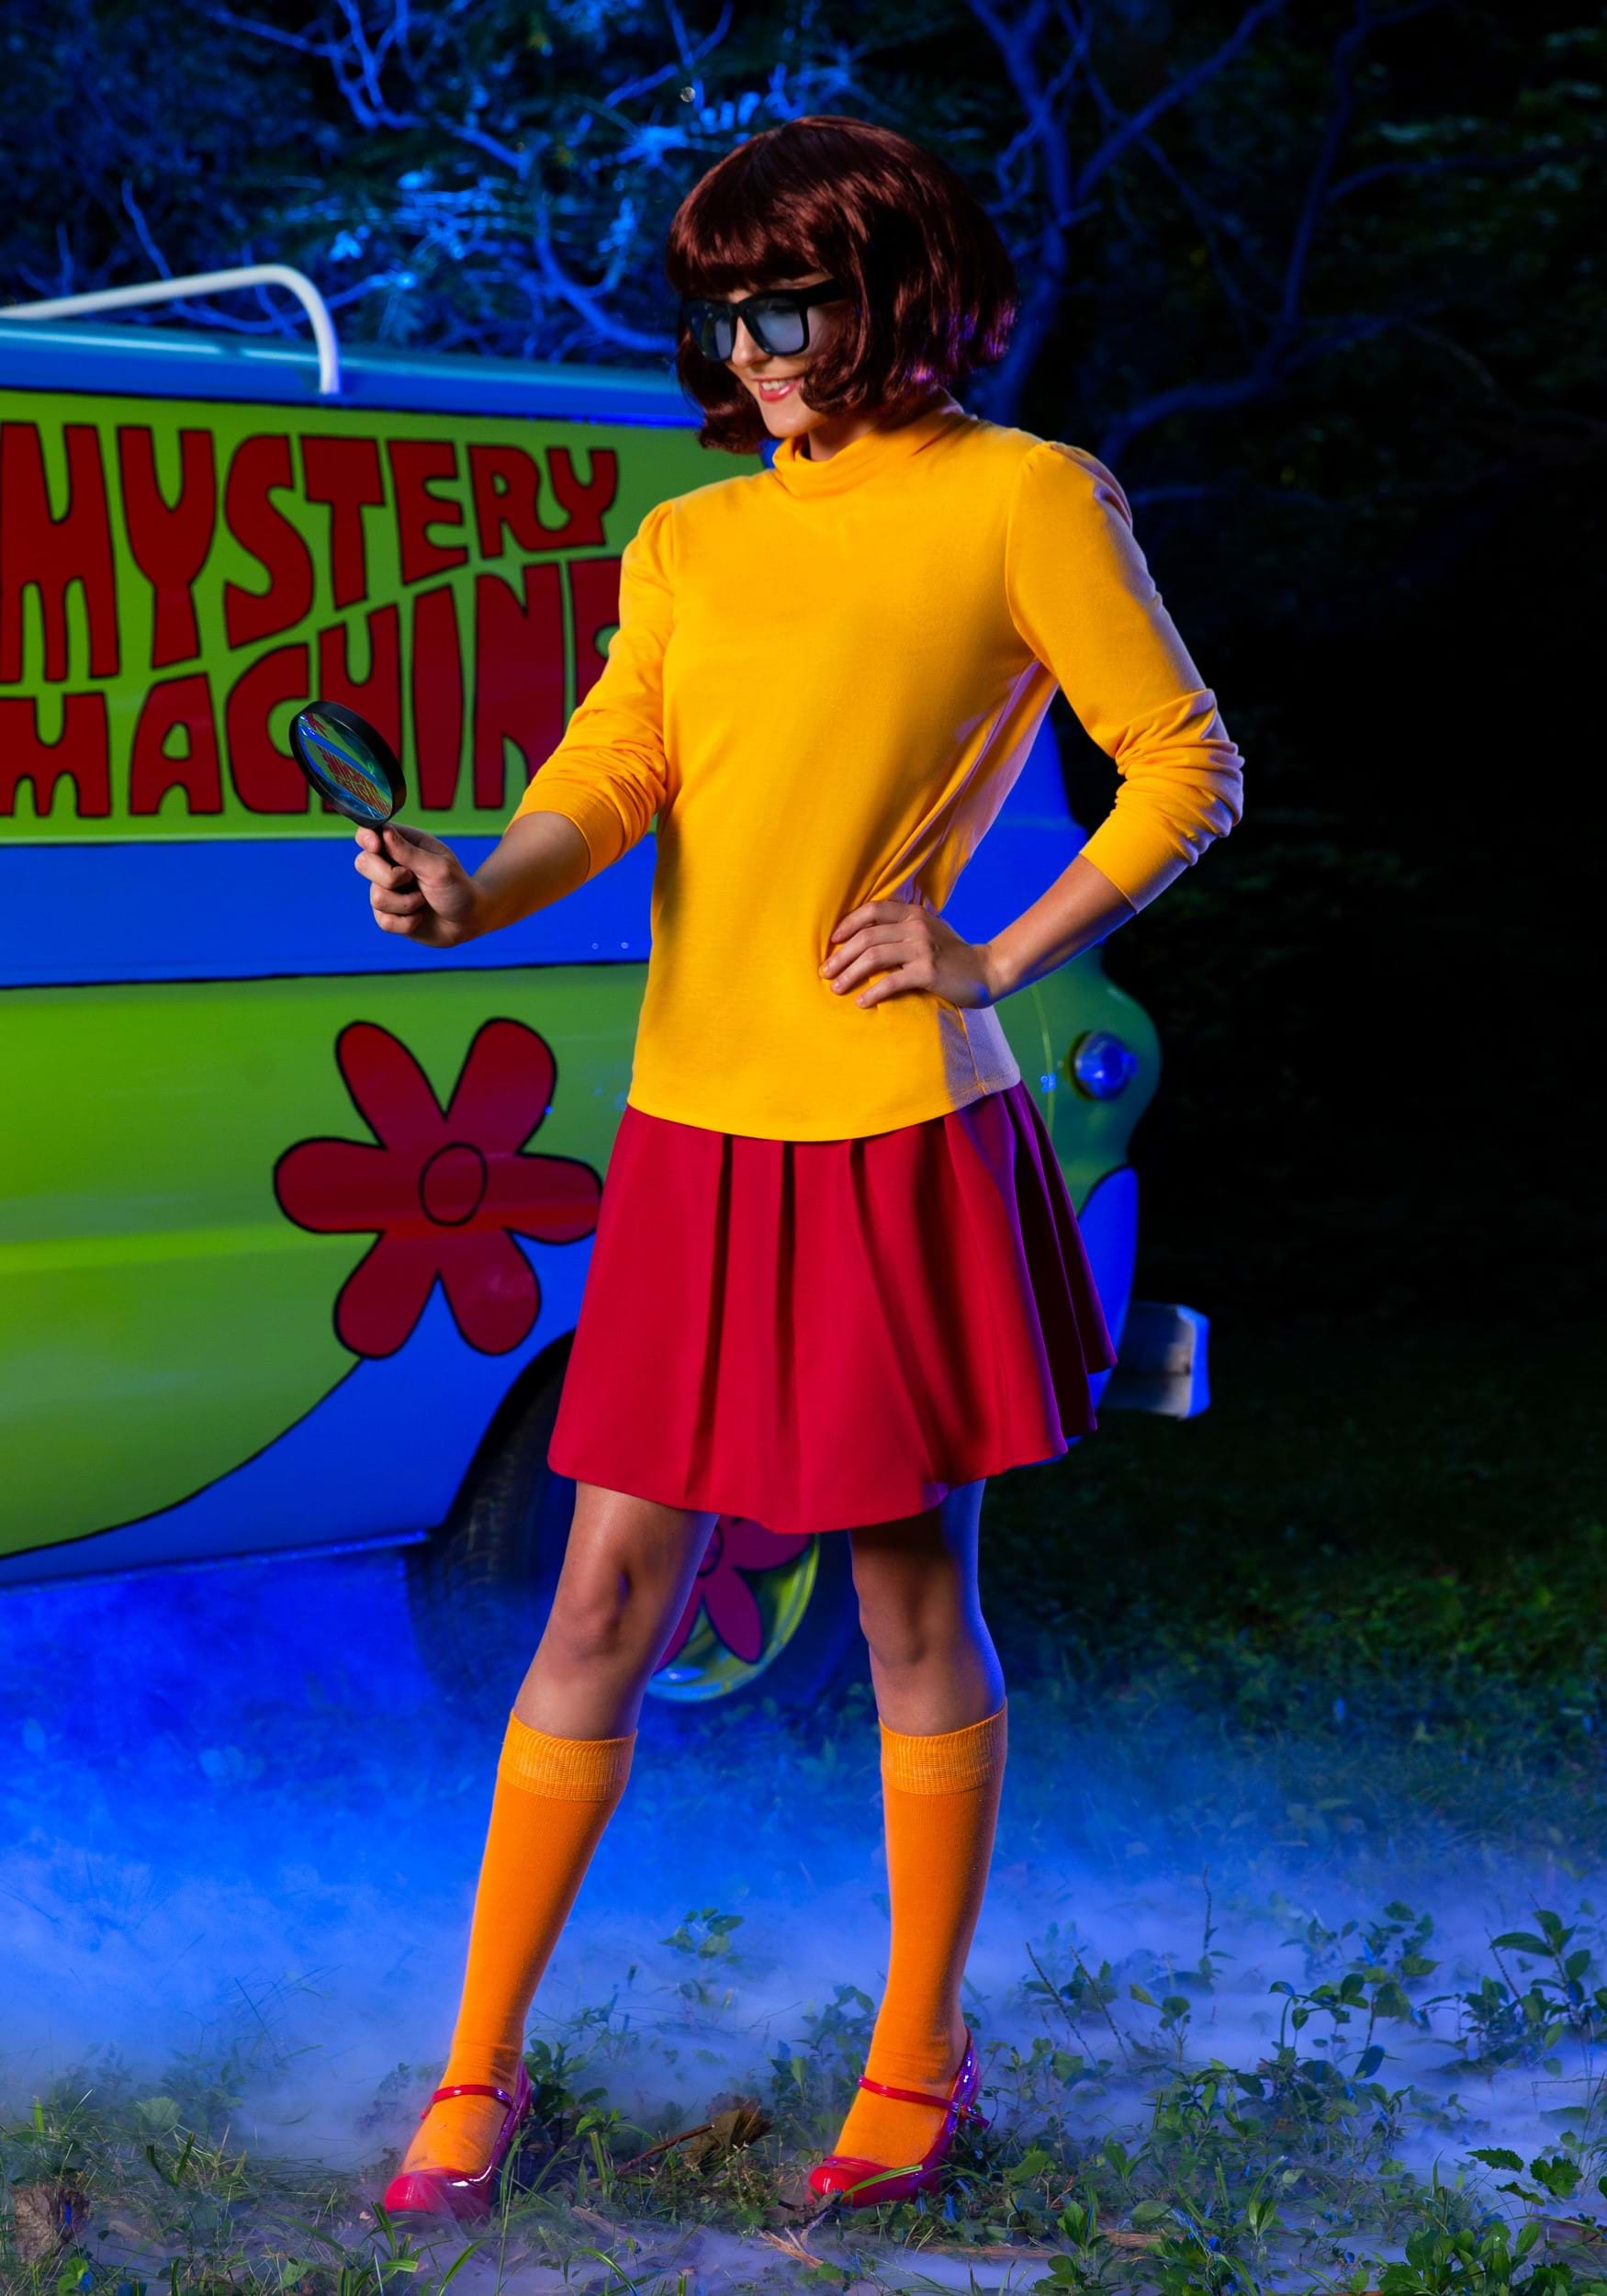 Scooby Doo Velma Costume - Scooby Doo Halloween Costumes